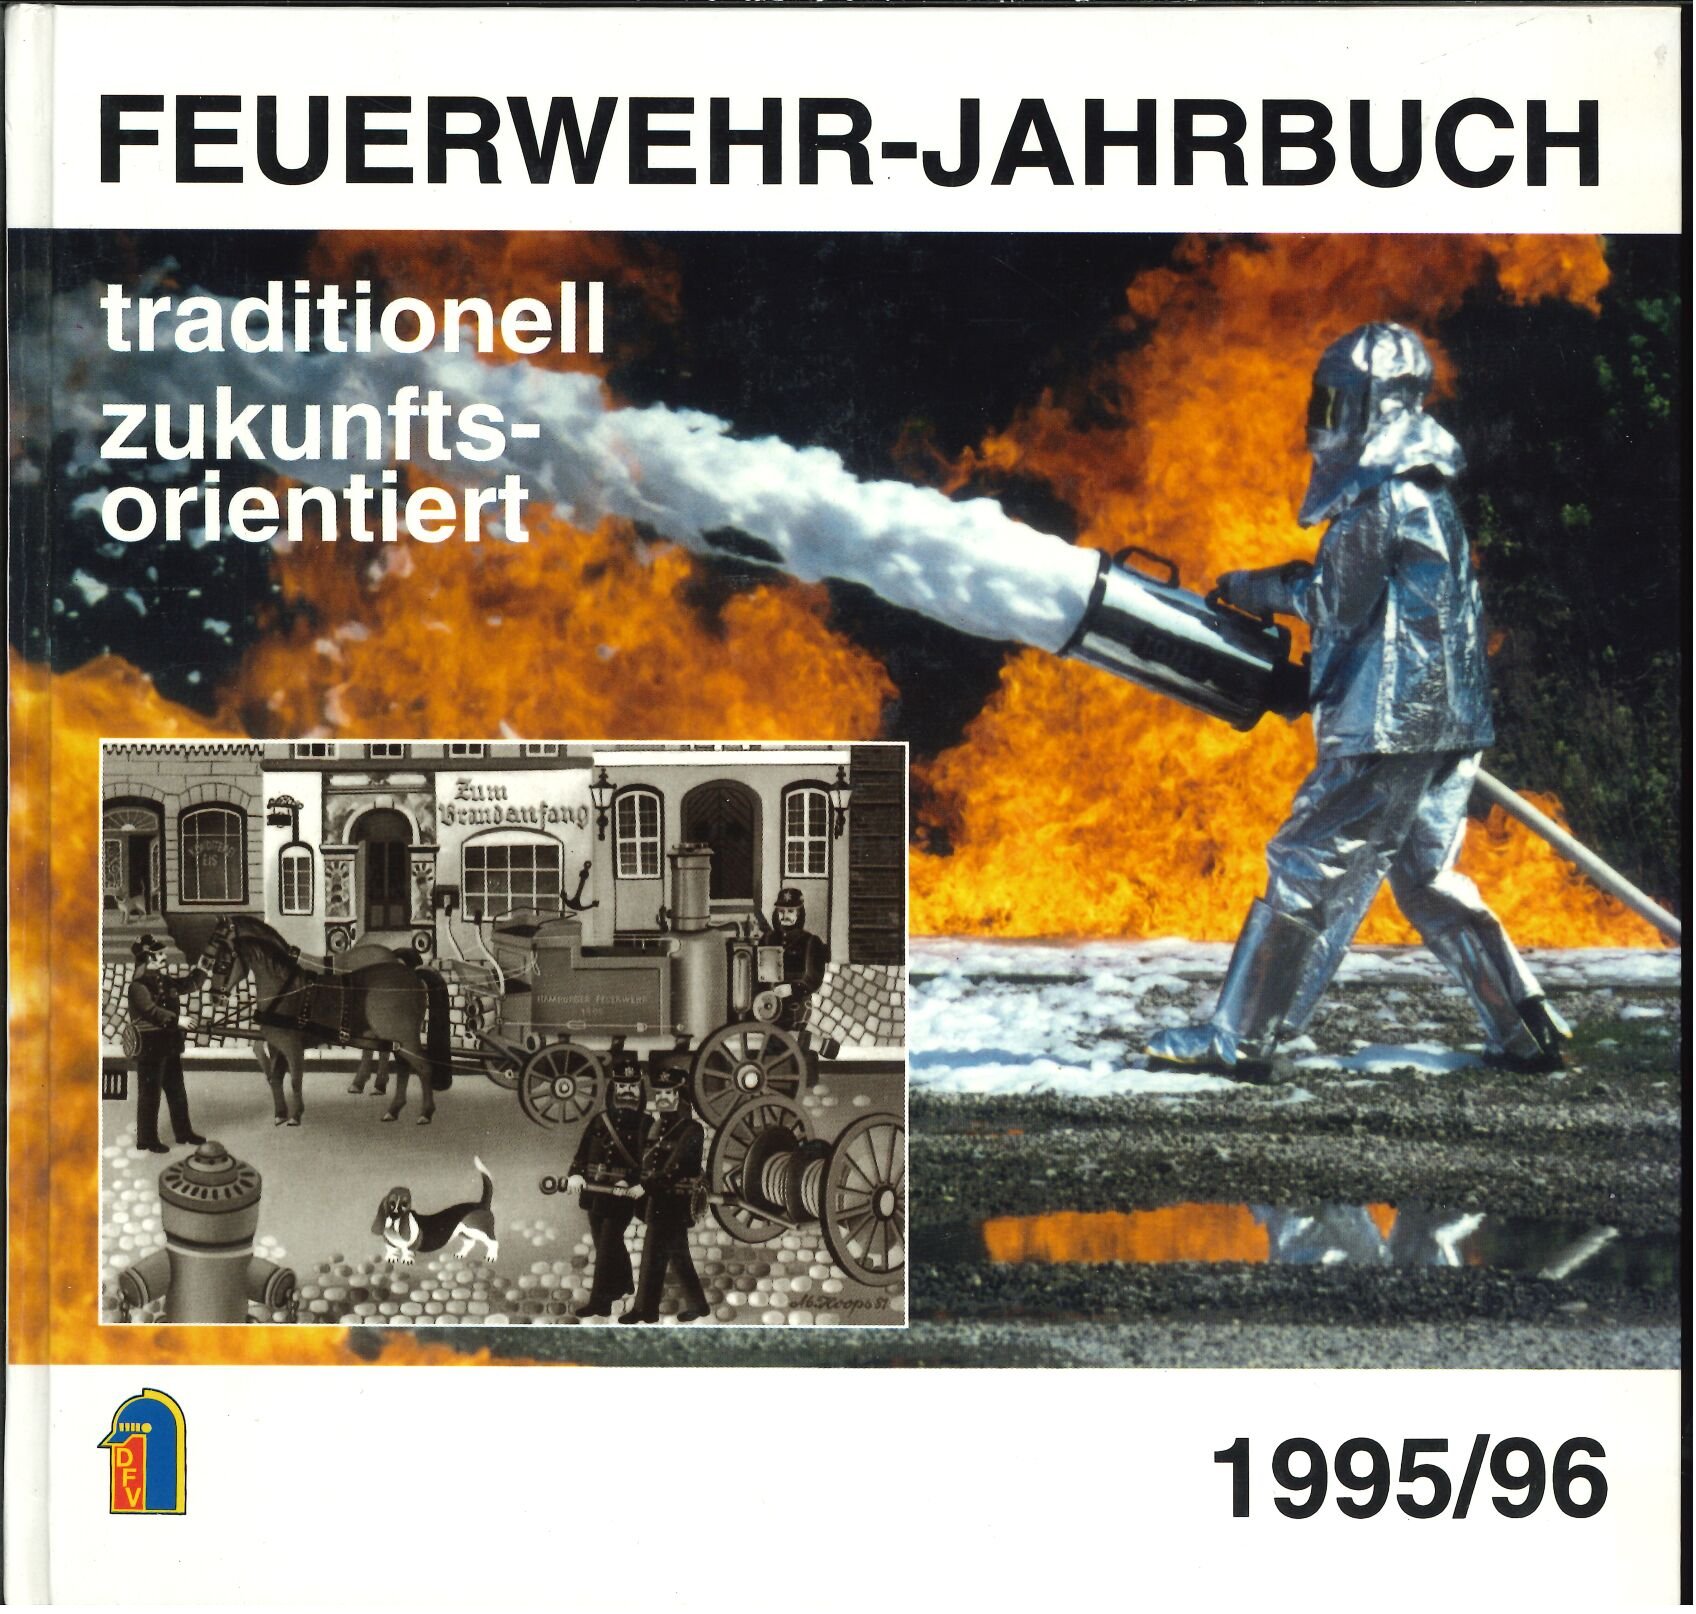 Feuerwehr-Jahrbuch 1995/96 (Feuerwehrmuseum Grethen CC BY-NC-SA)